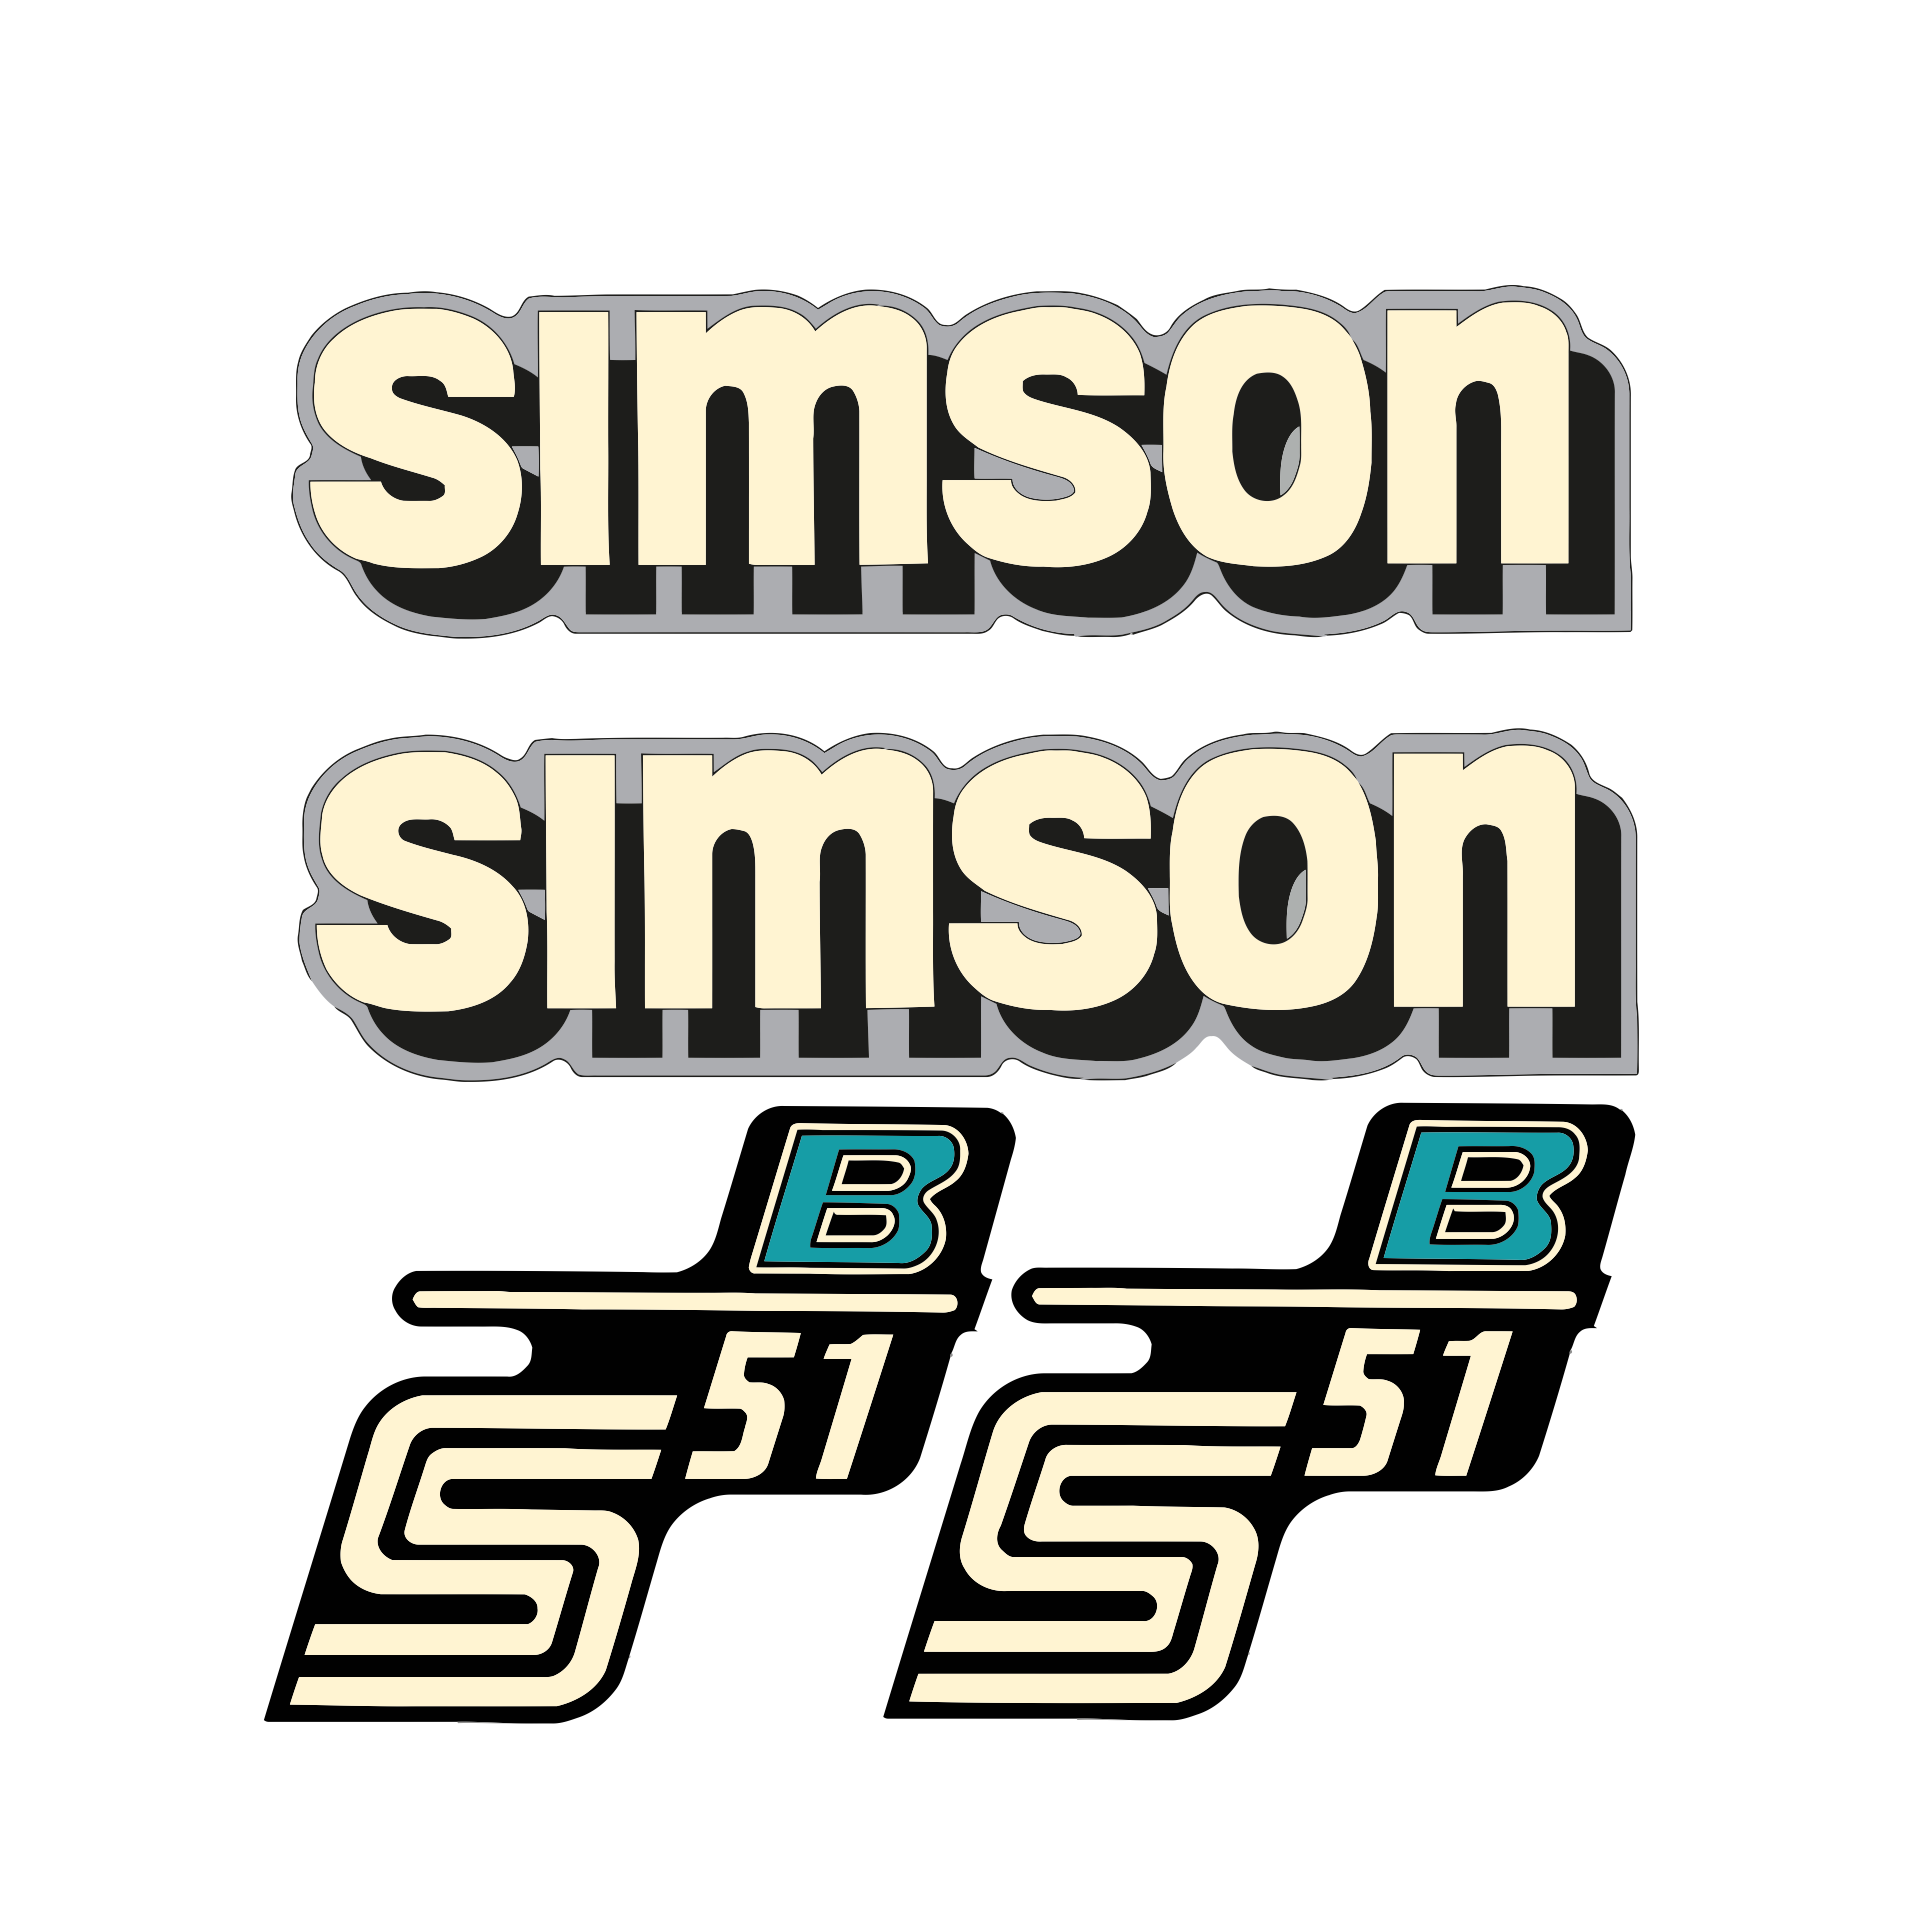 4-piece decor set Simson S51 Electronic gray sticker set